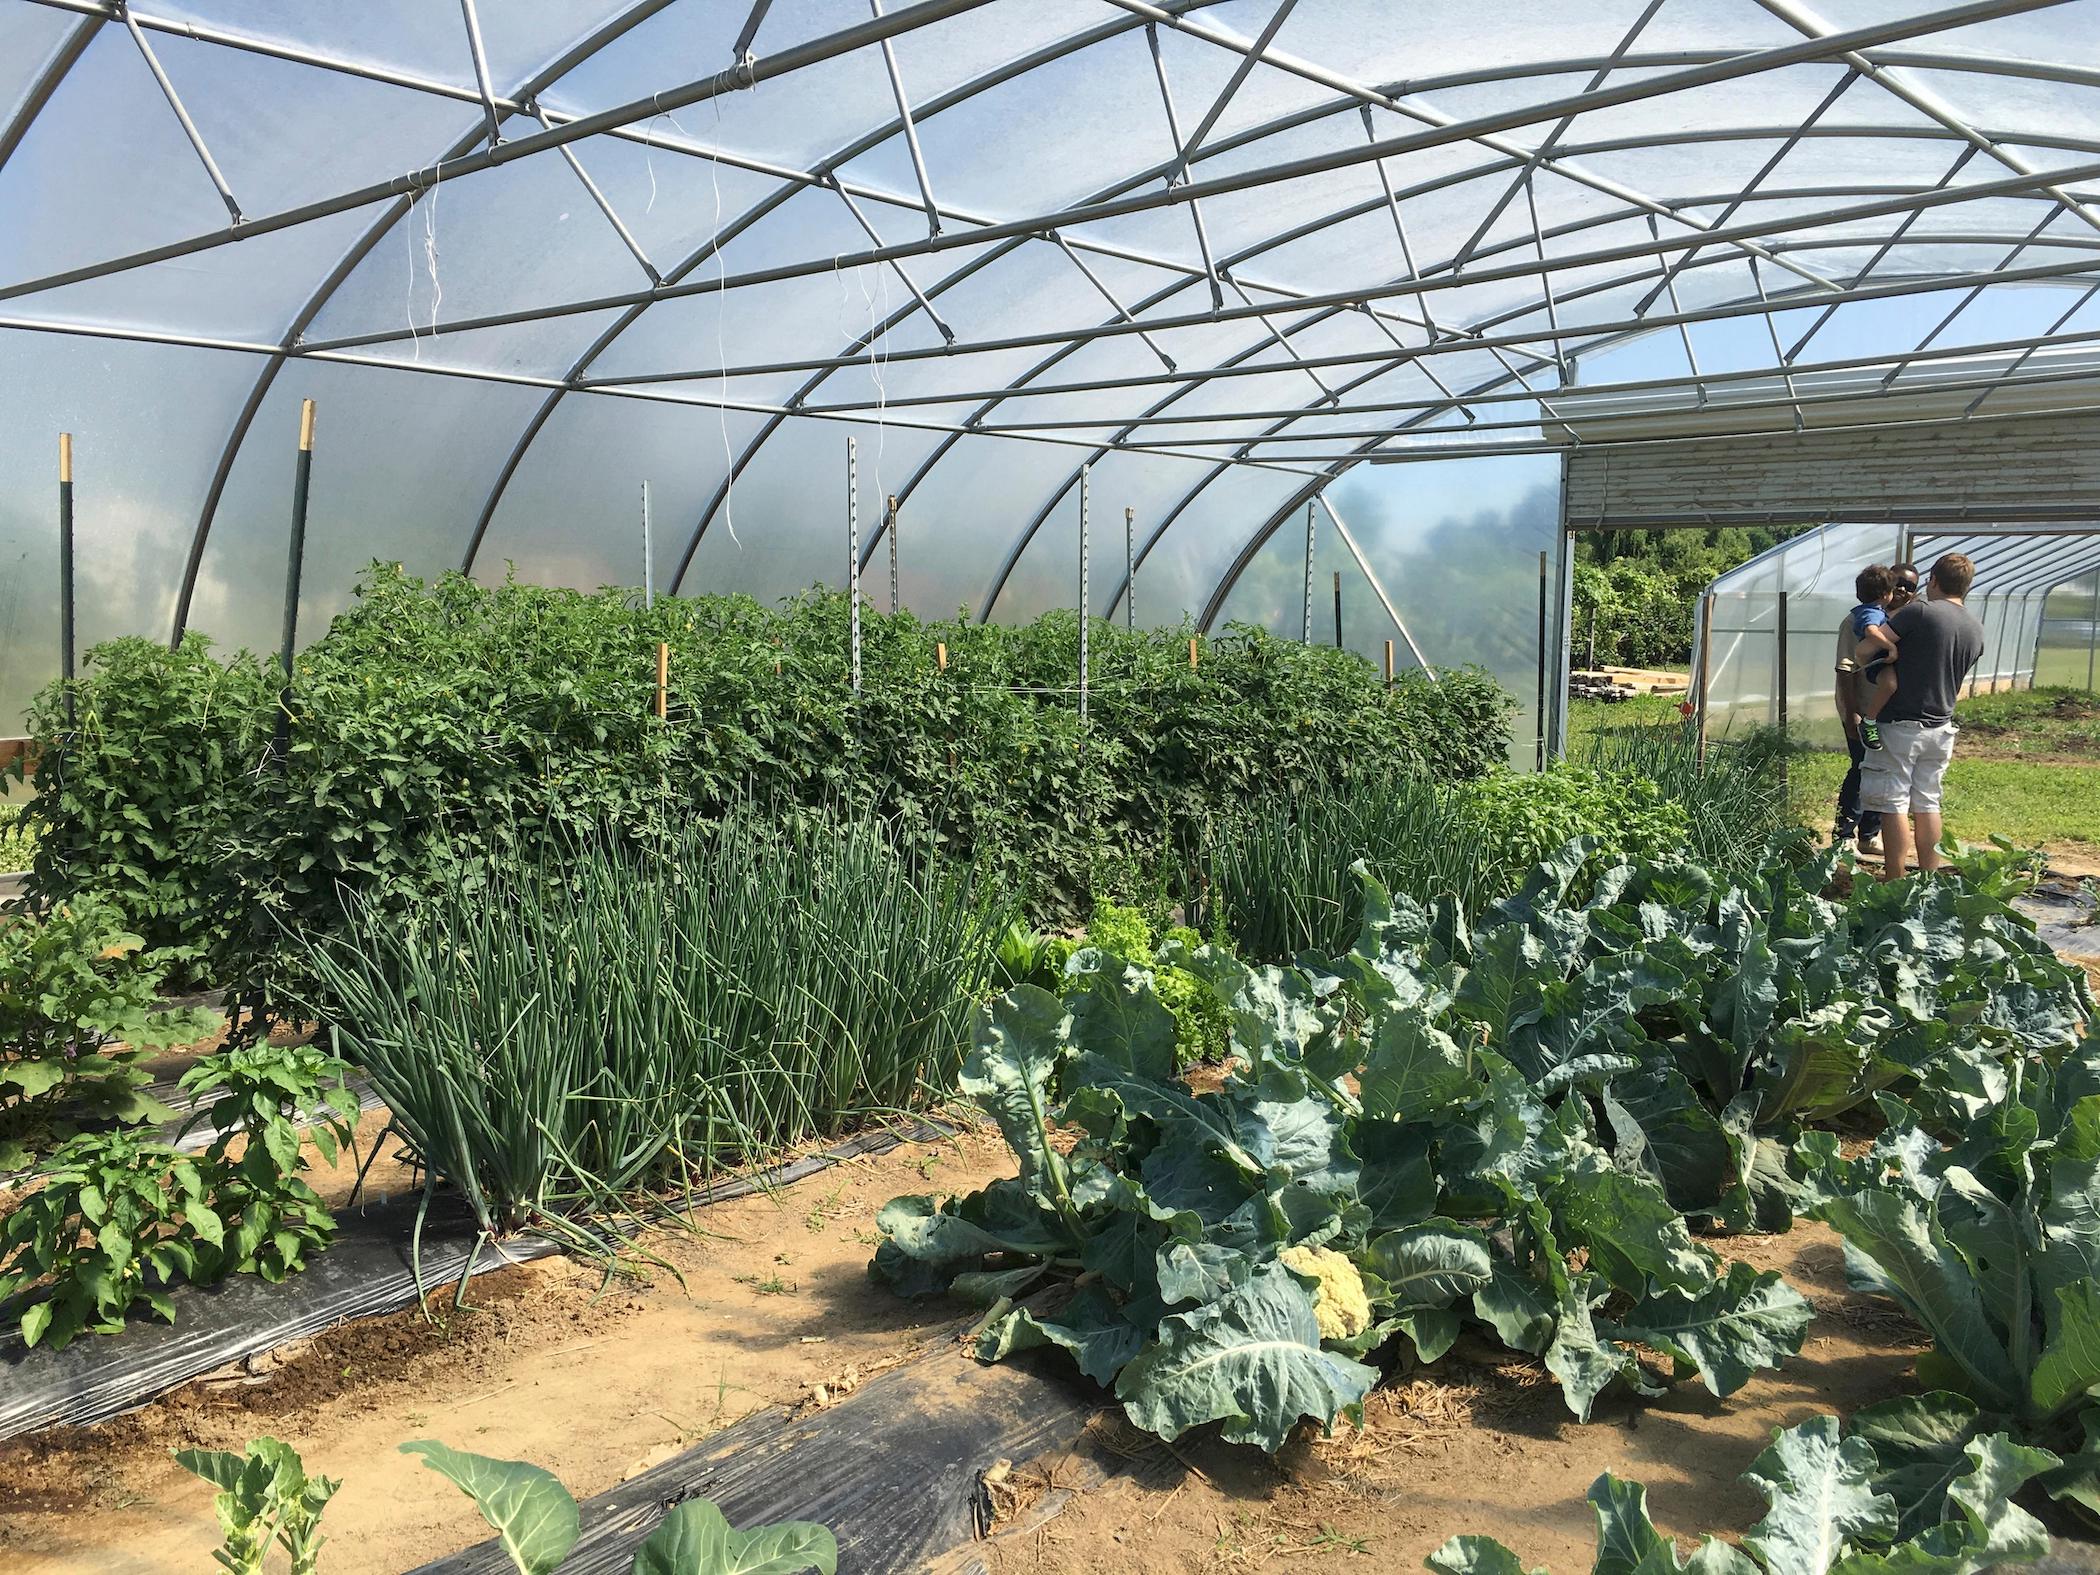 High tunnel for crop growing season extension, DSU Outreach and Research Center, Smyrna, DE.